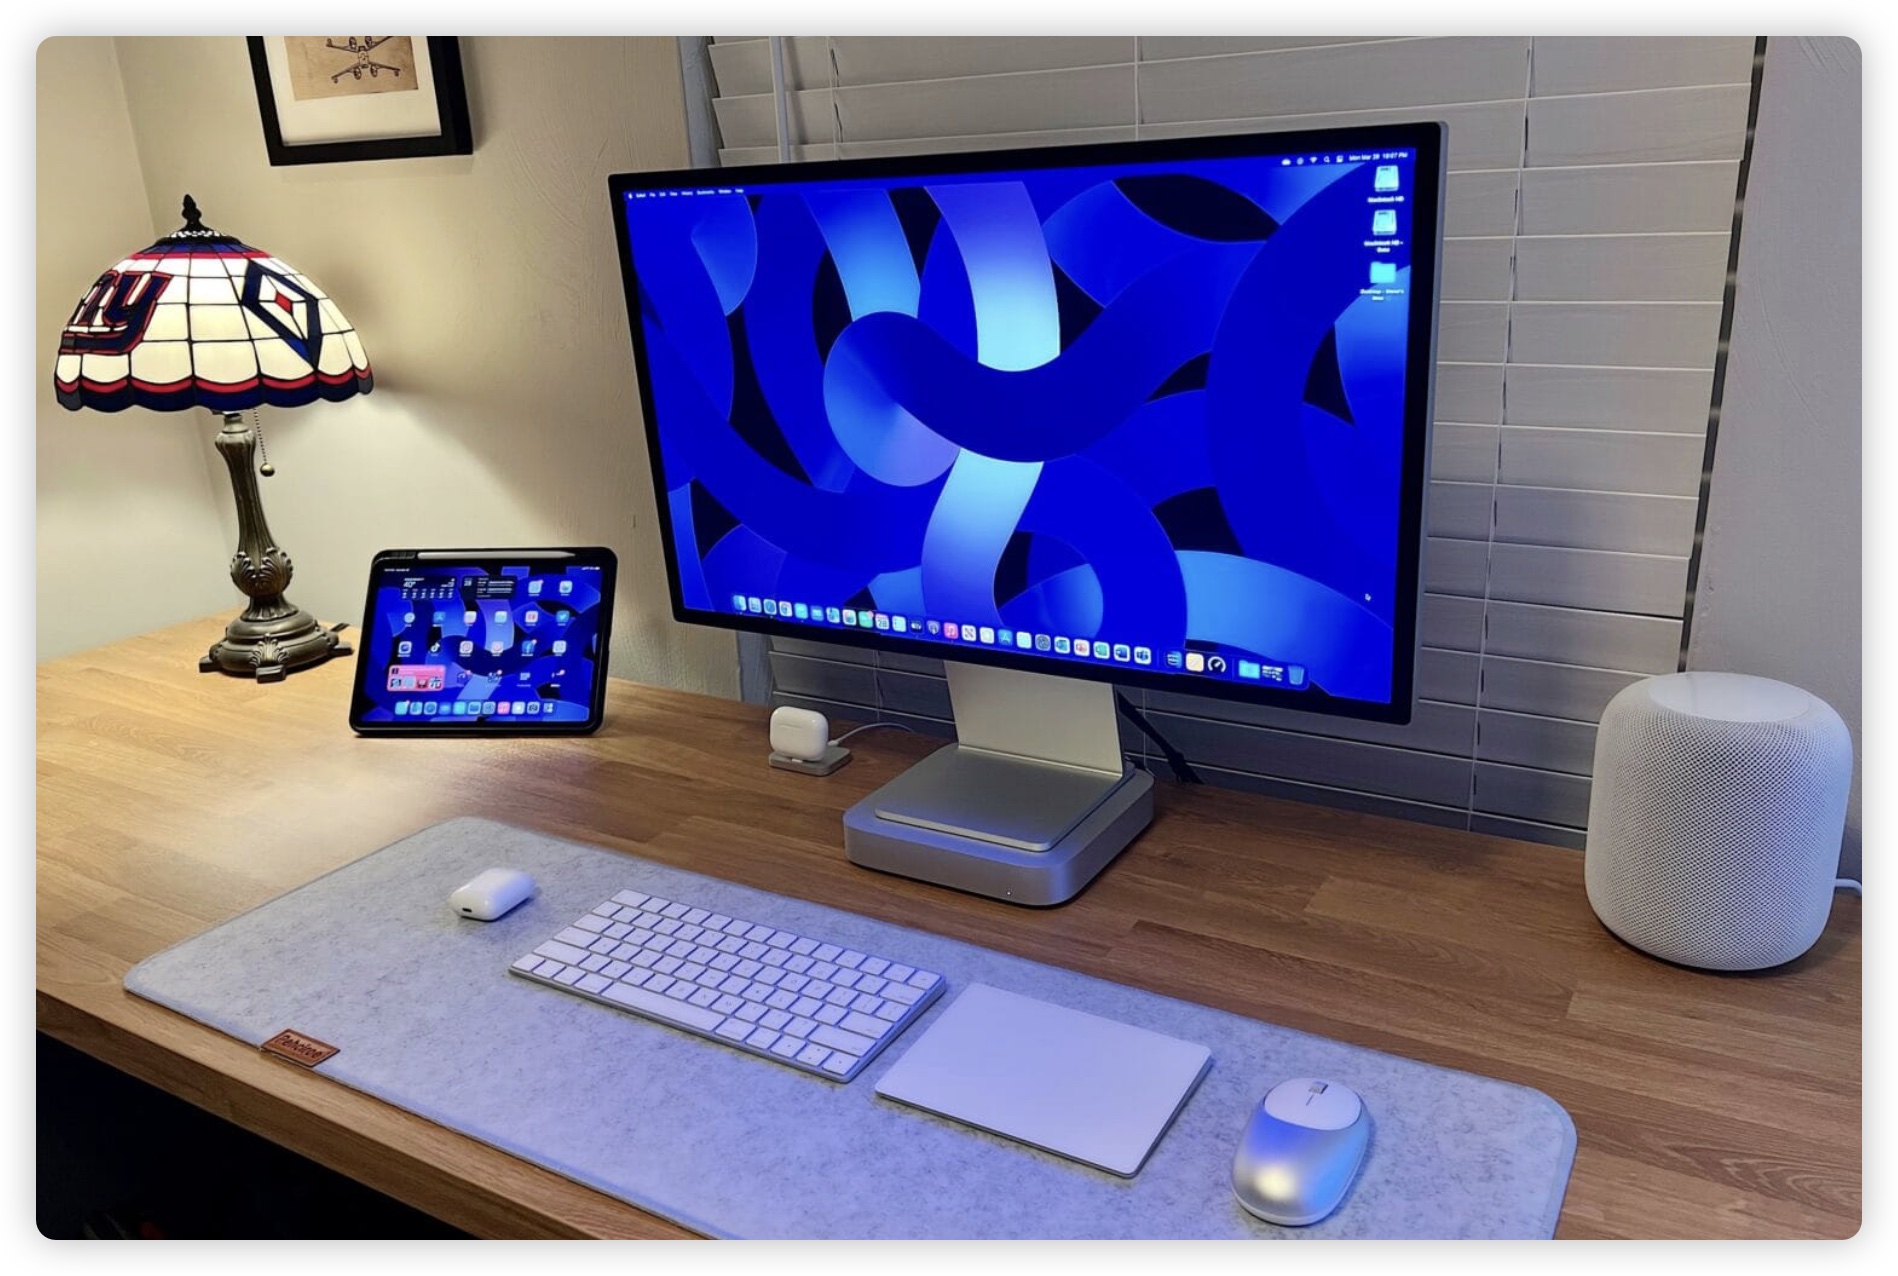 Mac mini iMc 24 吋 27 吋 Studio Display